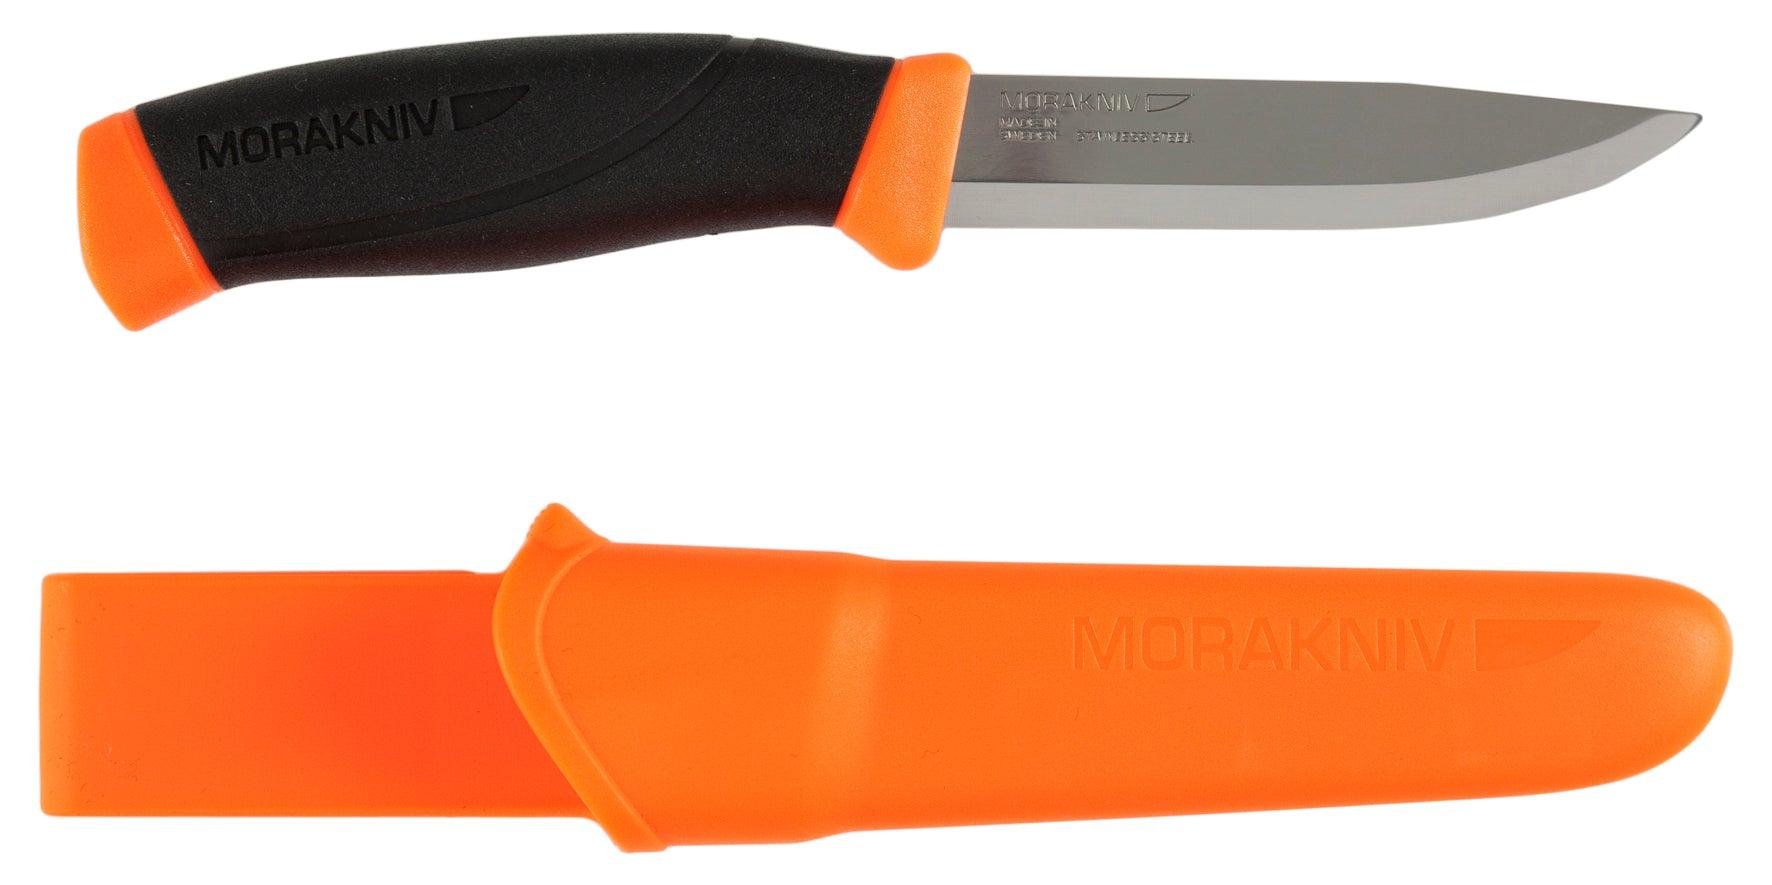 Mora Insulation Knife (13.75) for Sale $25.28